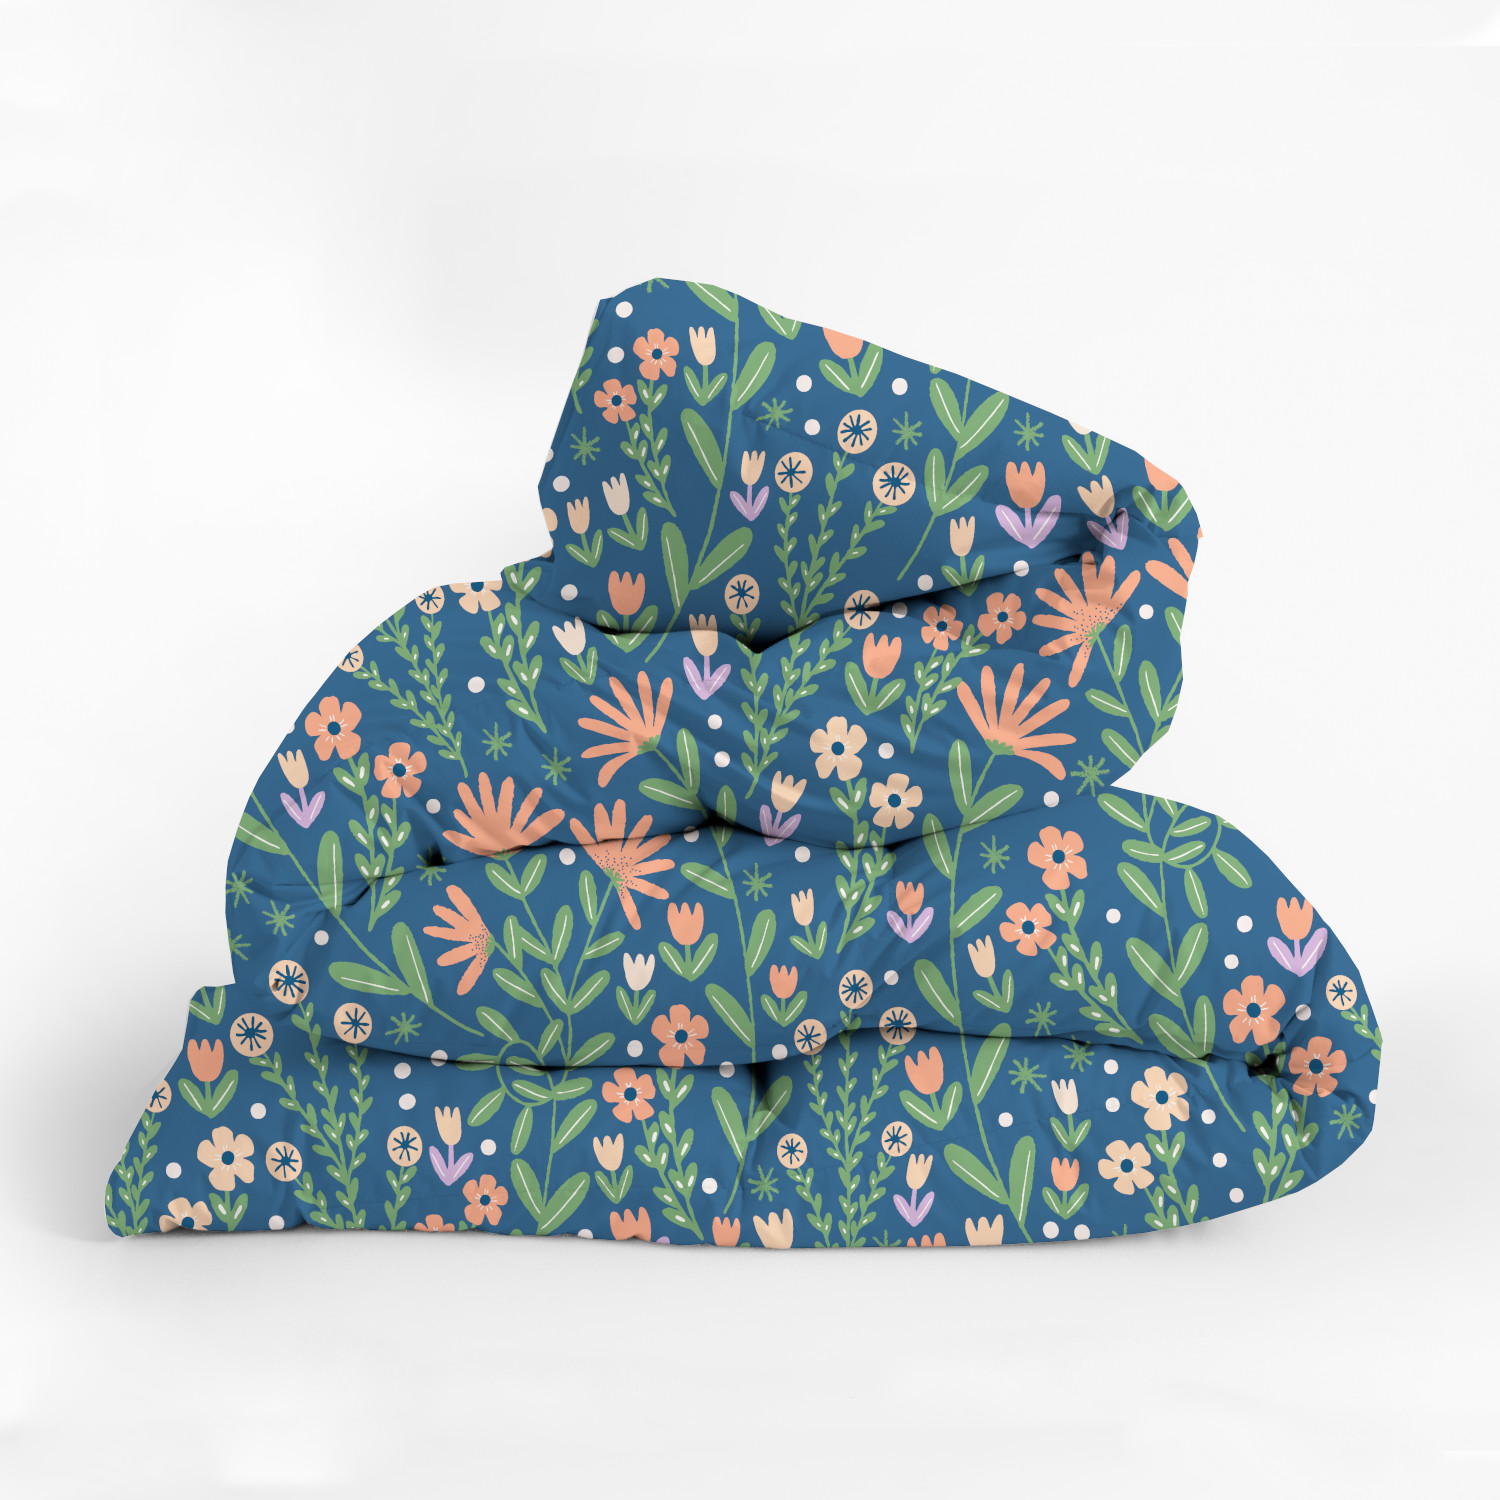 218-comforter-mockupblue-floral-meadow-16811589527475.jpg